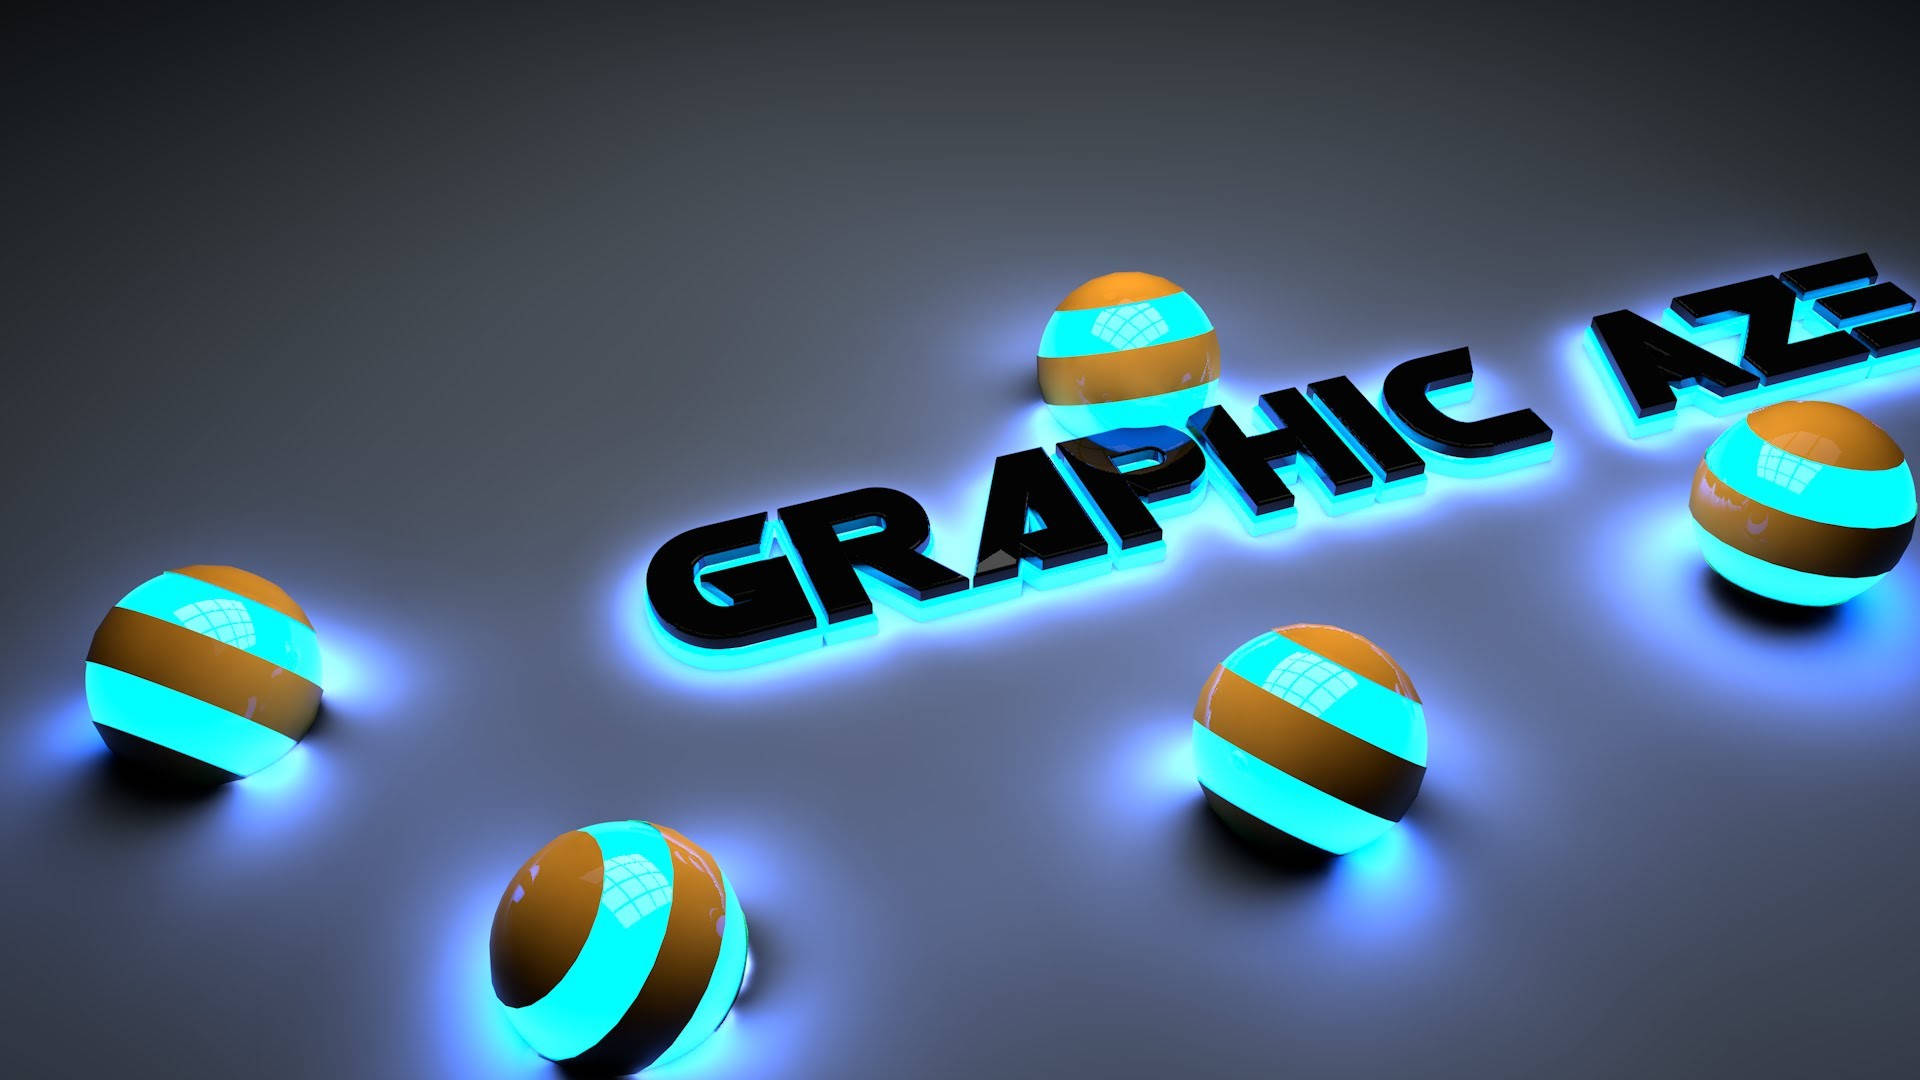 Luminous 4d Graphic Art Background